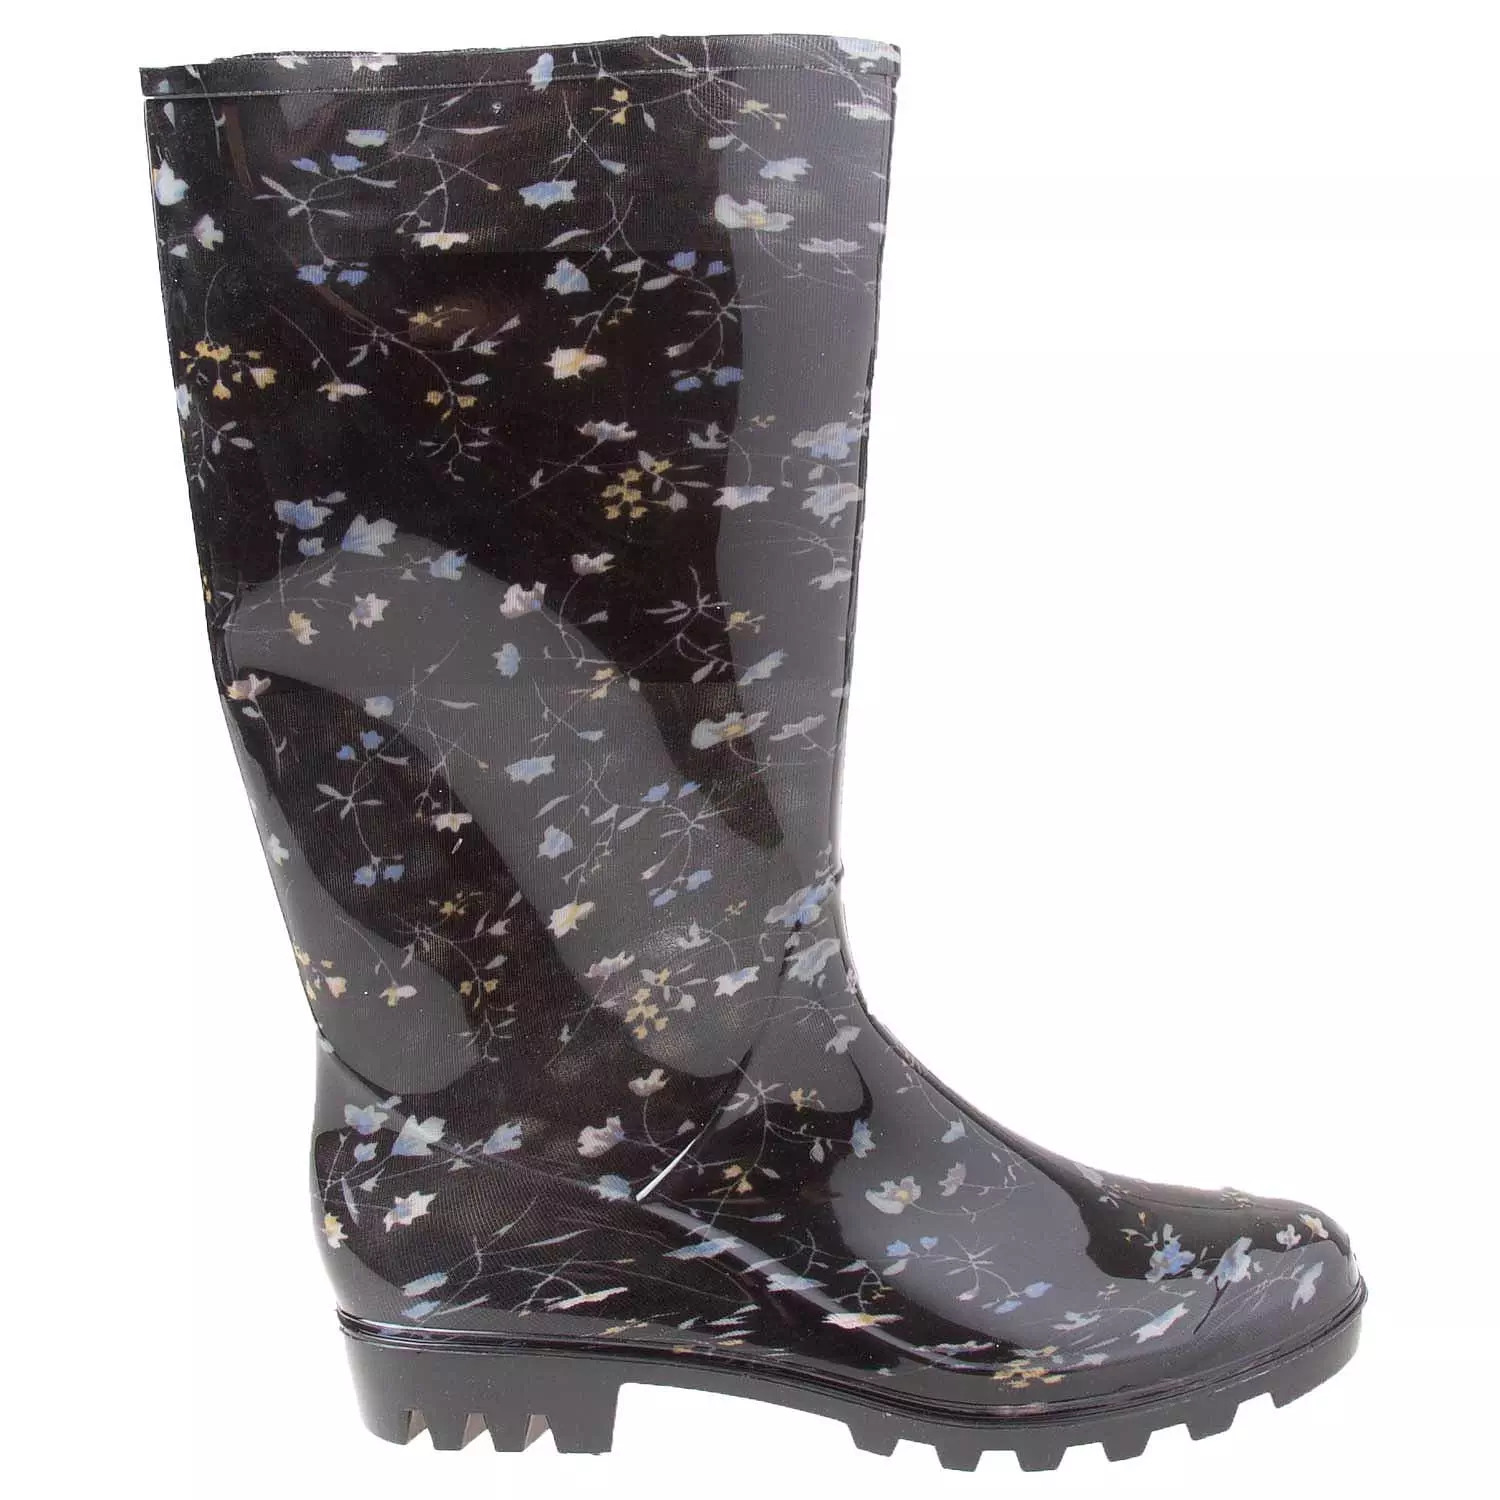 Simon Chang - Women's rain boots, 10